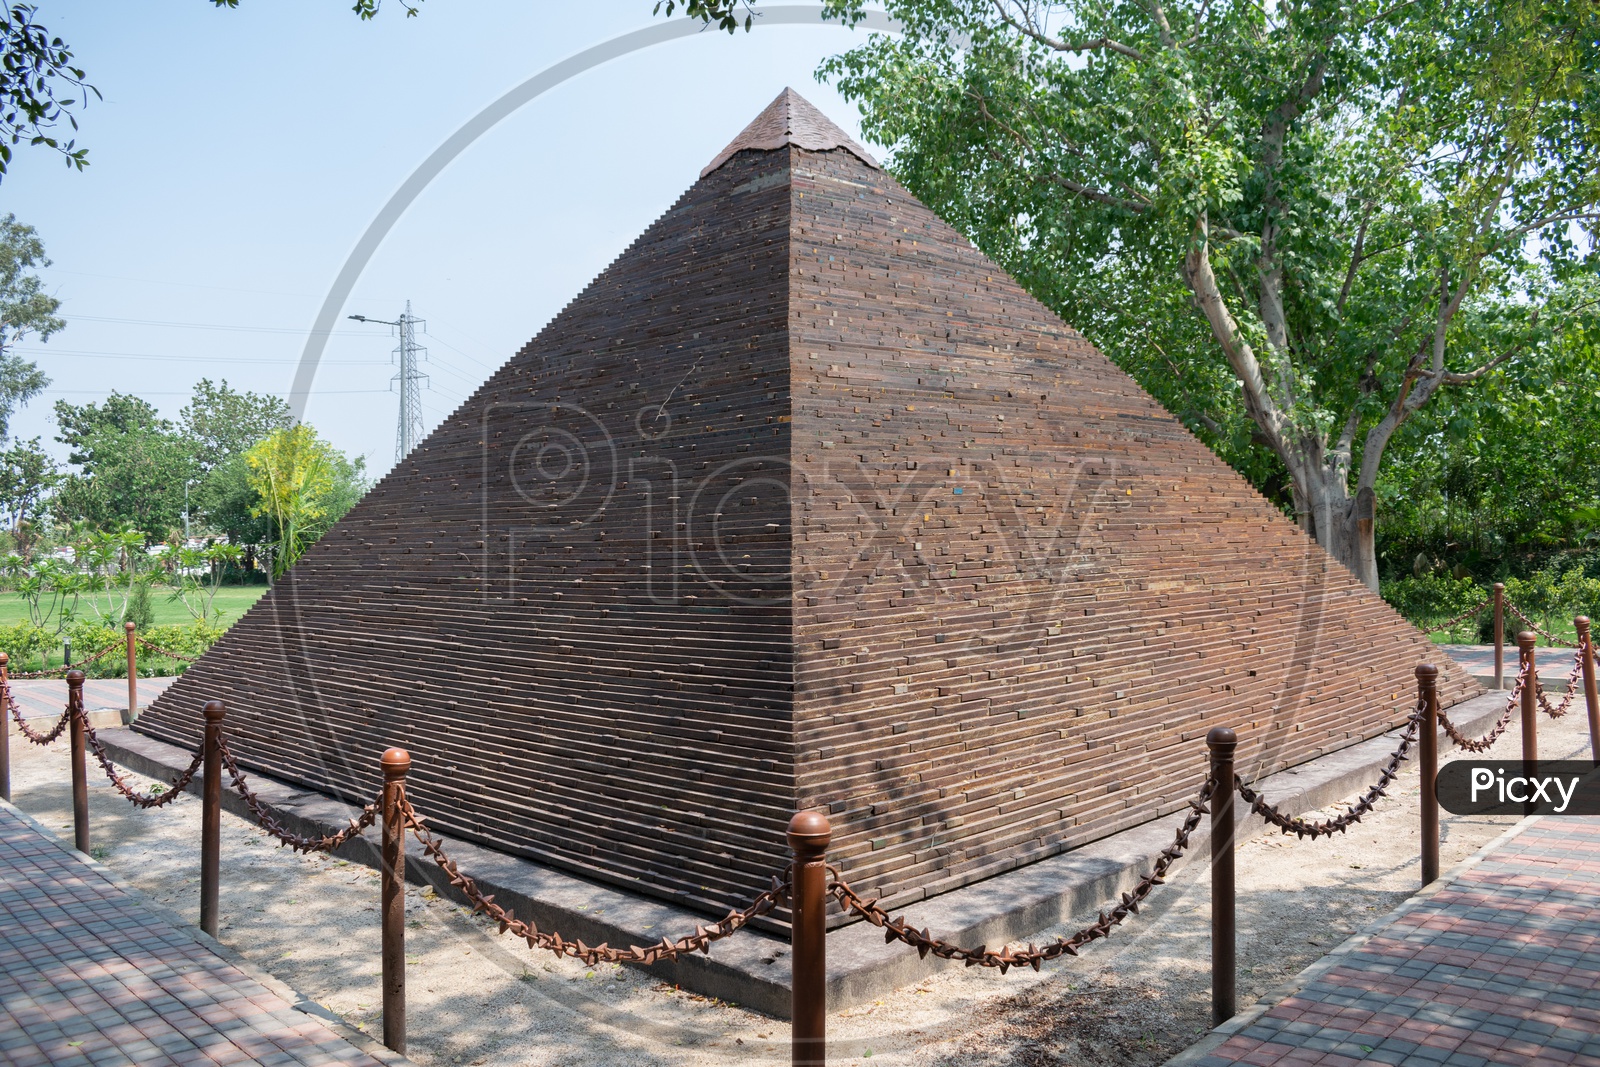 Replica of Egypt’s Pyramid Of Giza, Waste to Wonder, Delhi